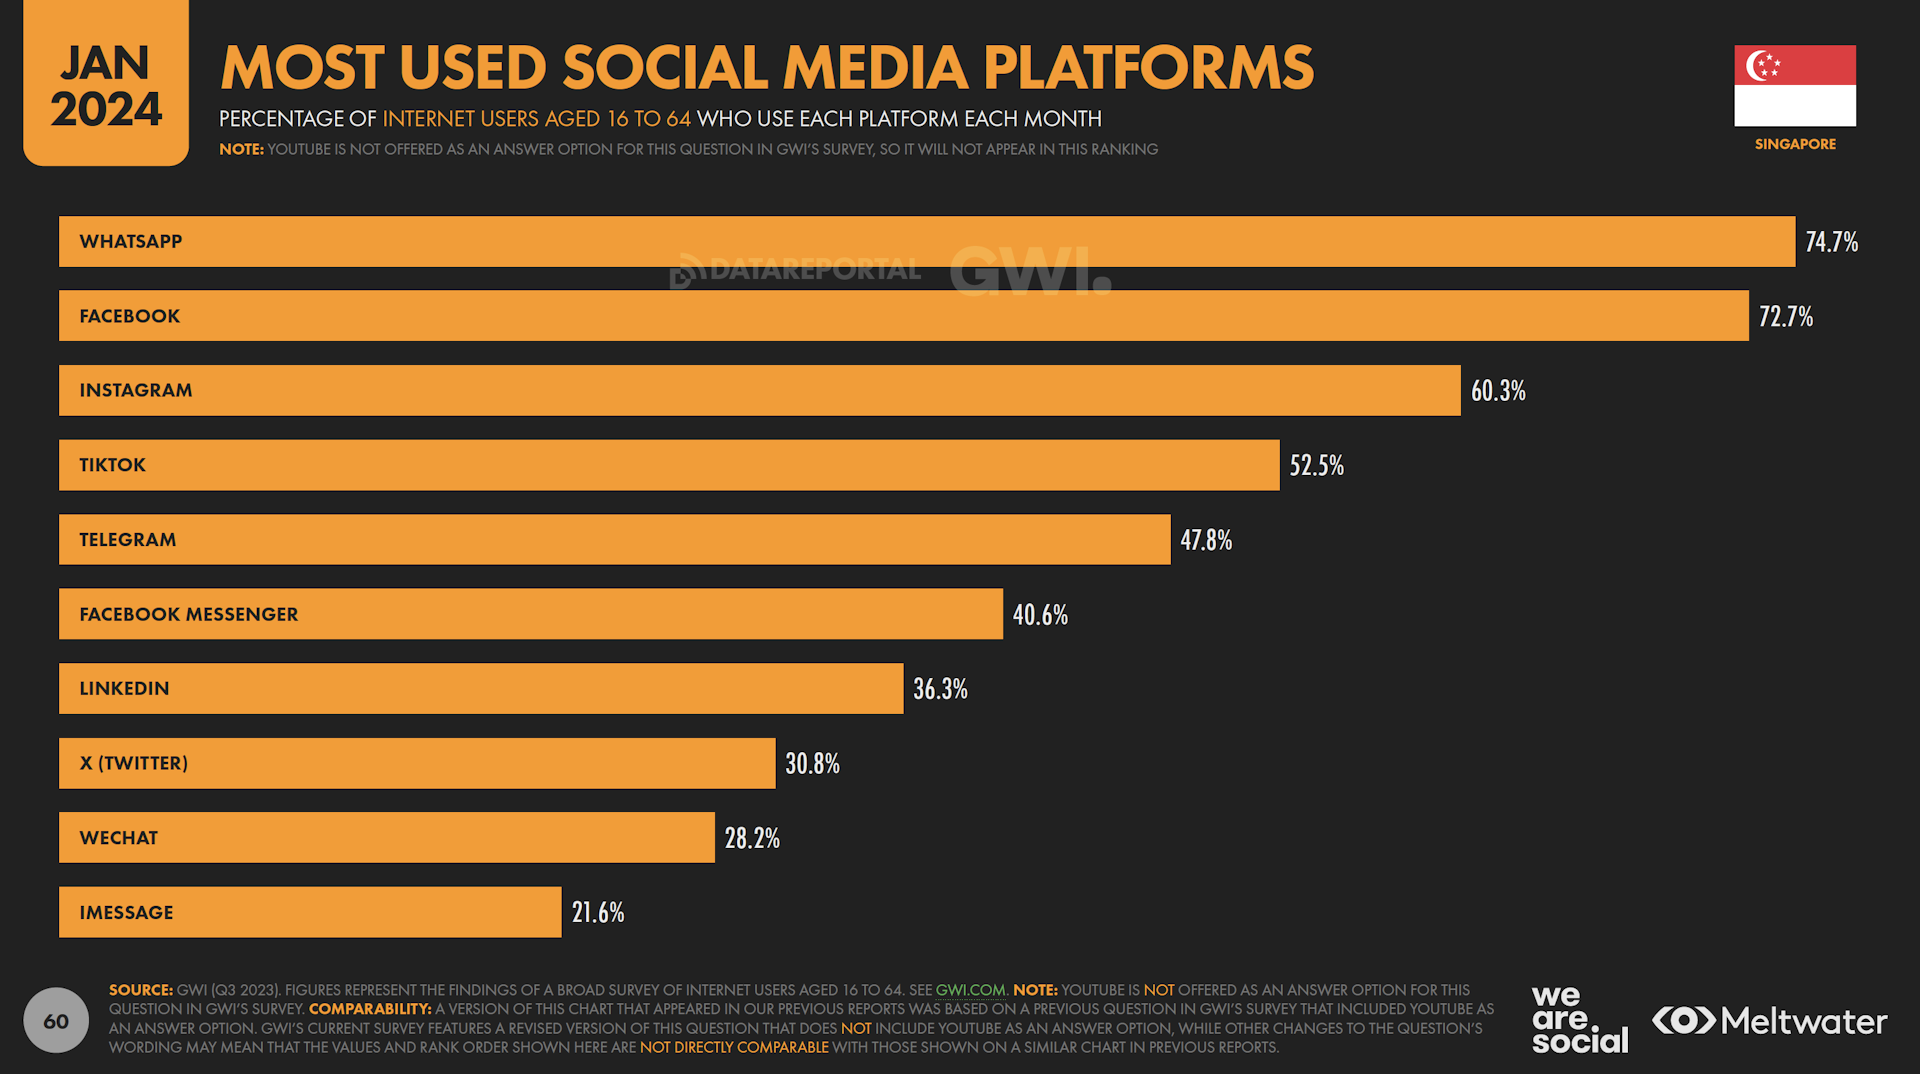 Most used social media platforms based on Global Digital Report 2024 for Singapore